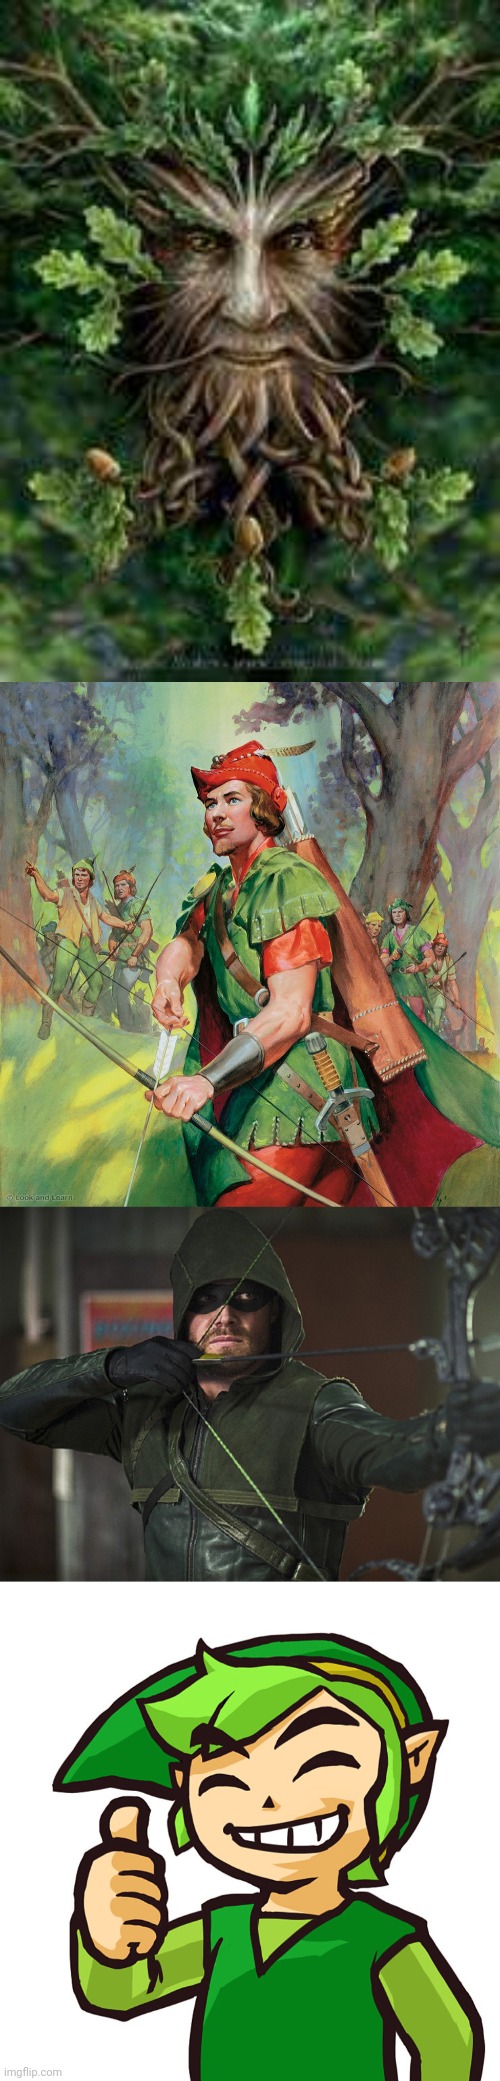 image tagged in green man,robin hood,green arrow,happy link | made w/ Imgflip meme maker